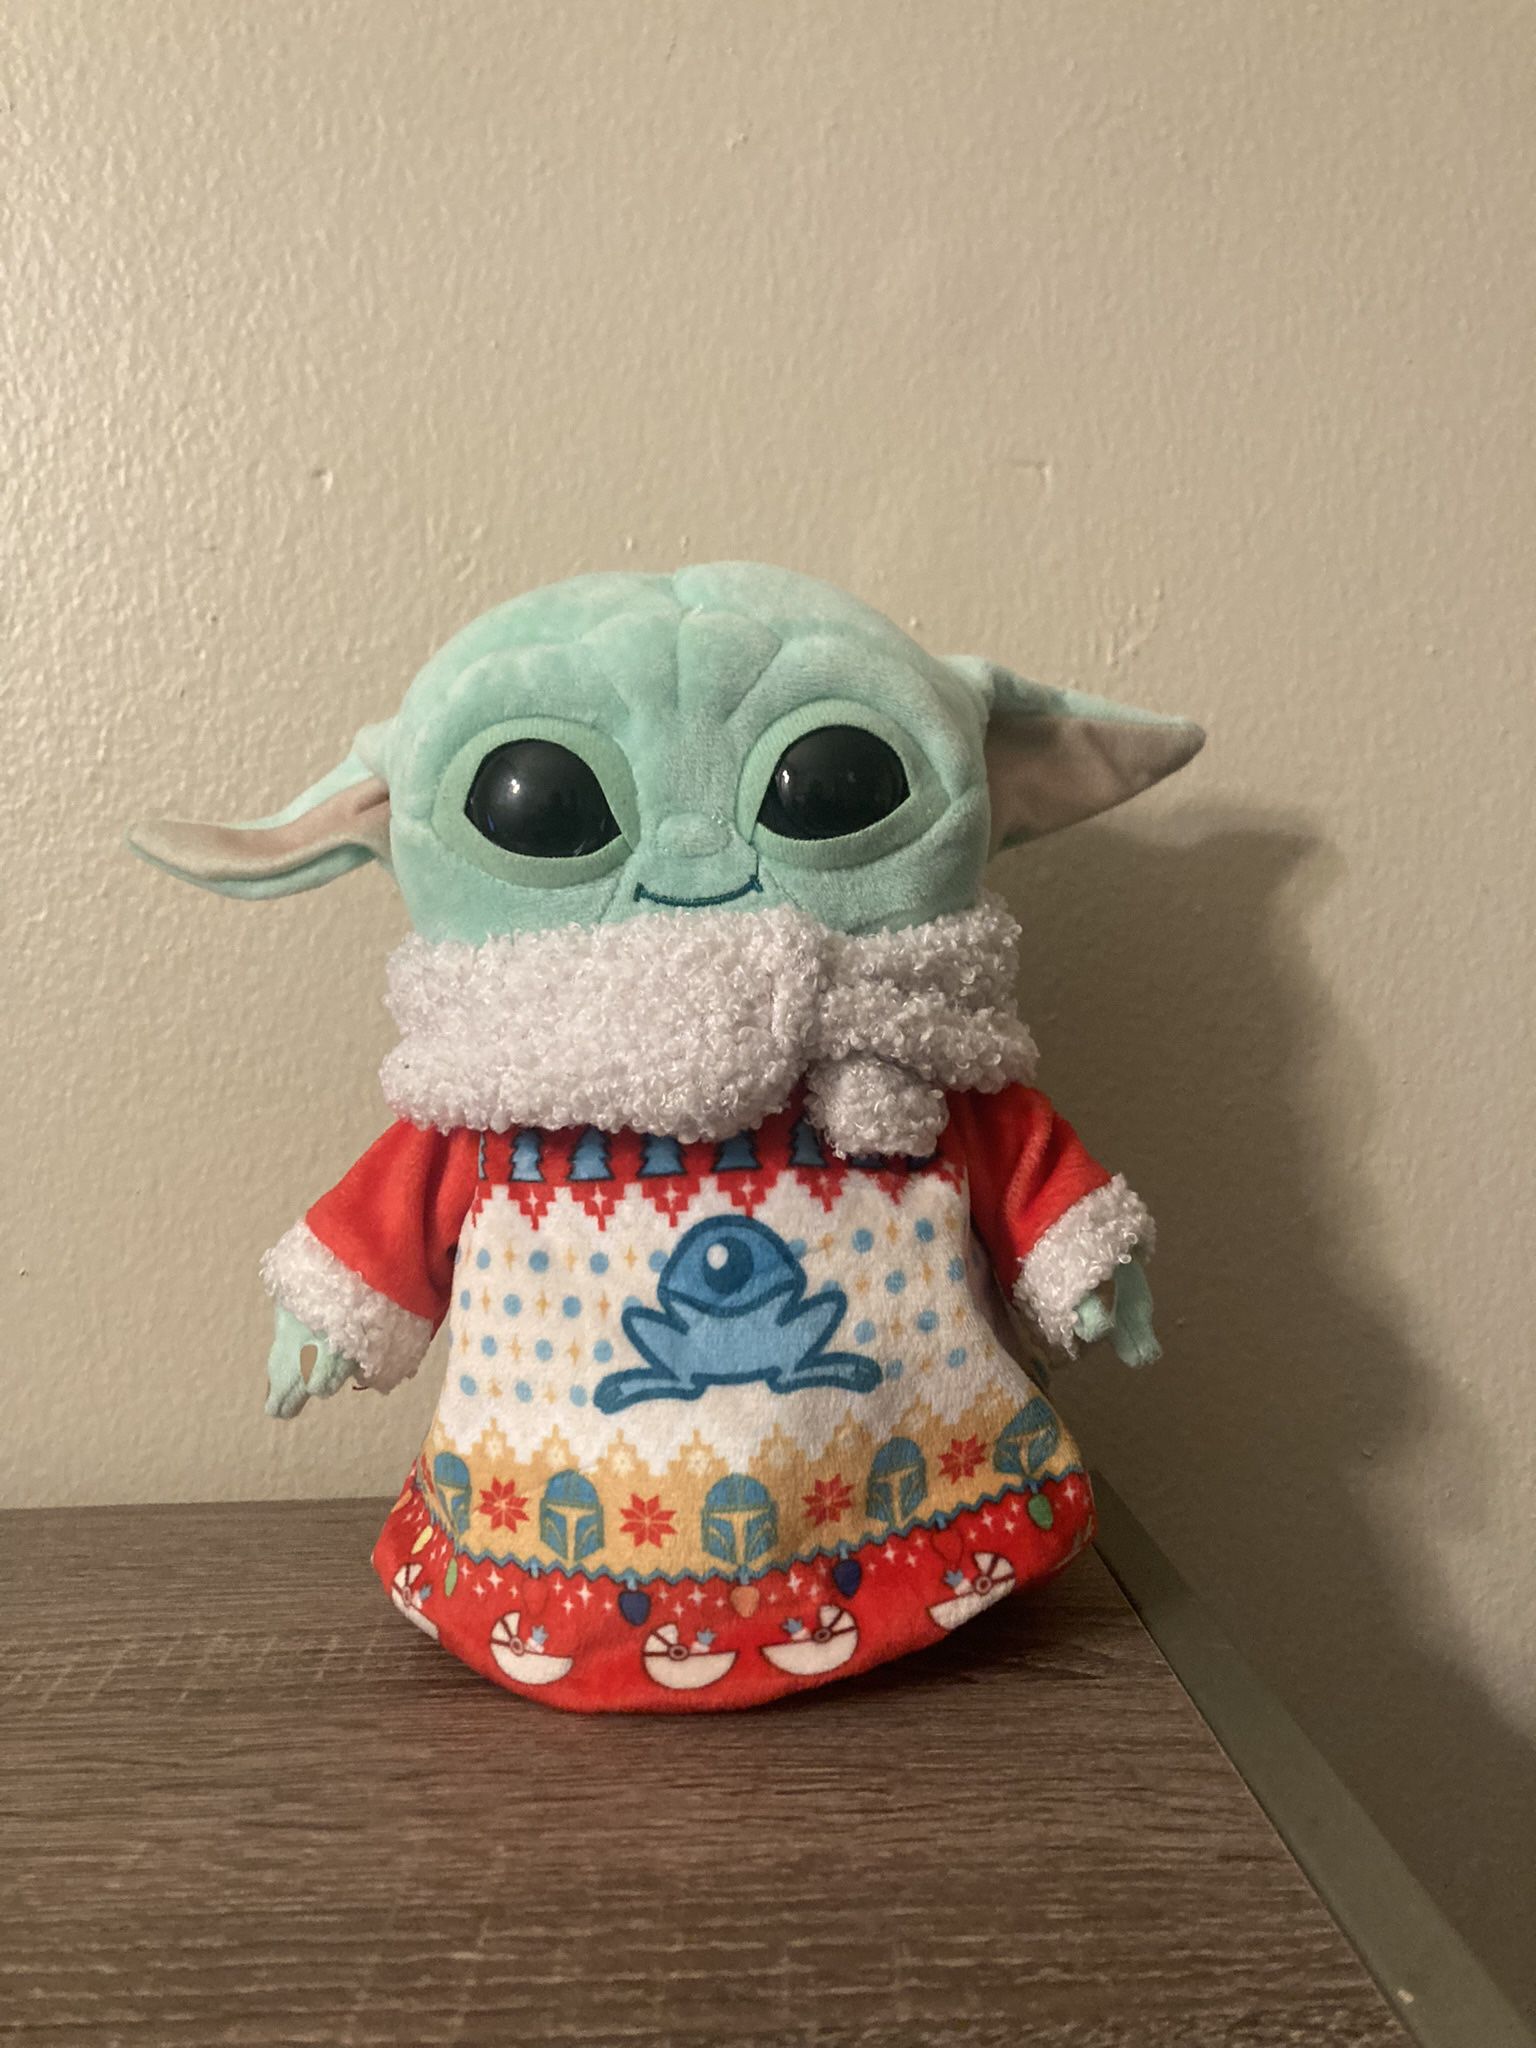 Star Wars The Mandalorian Grogu Baby Yoda The Child Christmas Sweater 8in Plush